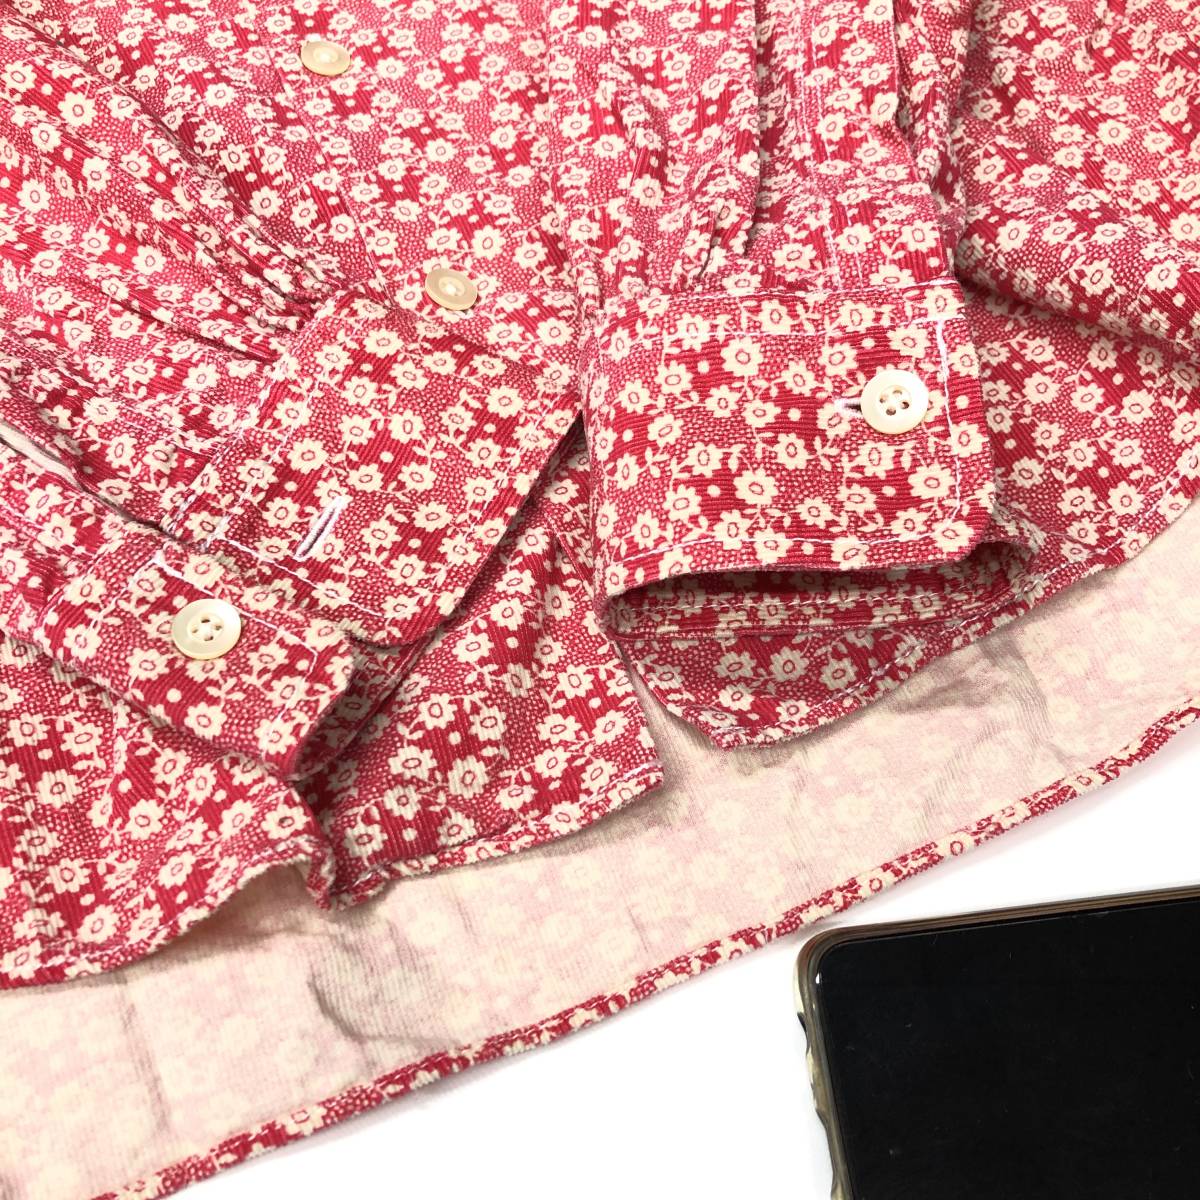 Jipijapa ヒピハパ コーデュロイシャツ 花柄 赤系 3サイズ 日本製 JP041208-02